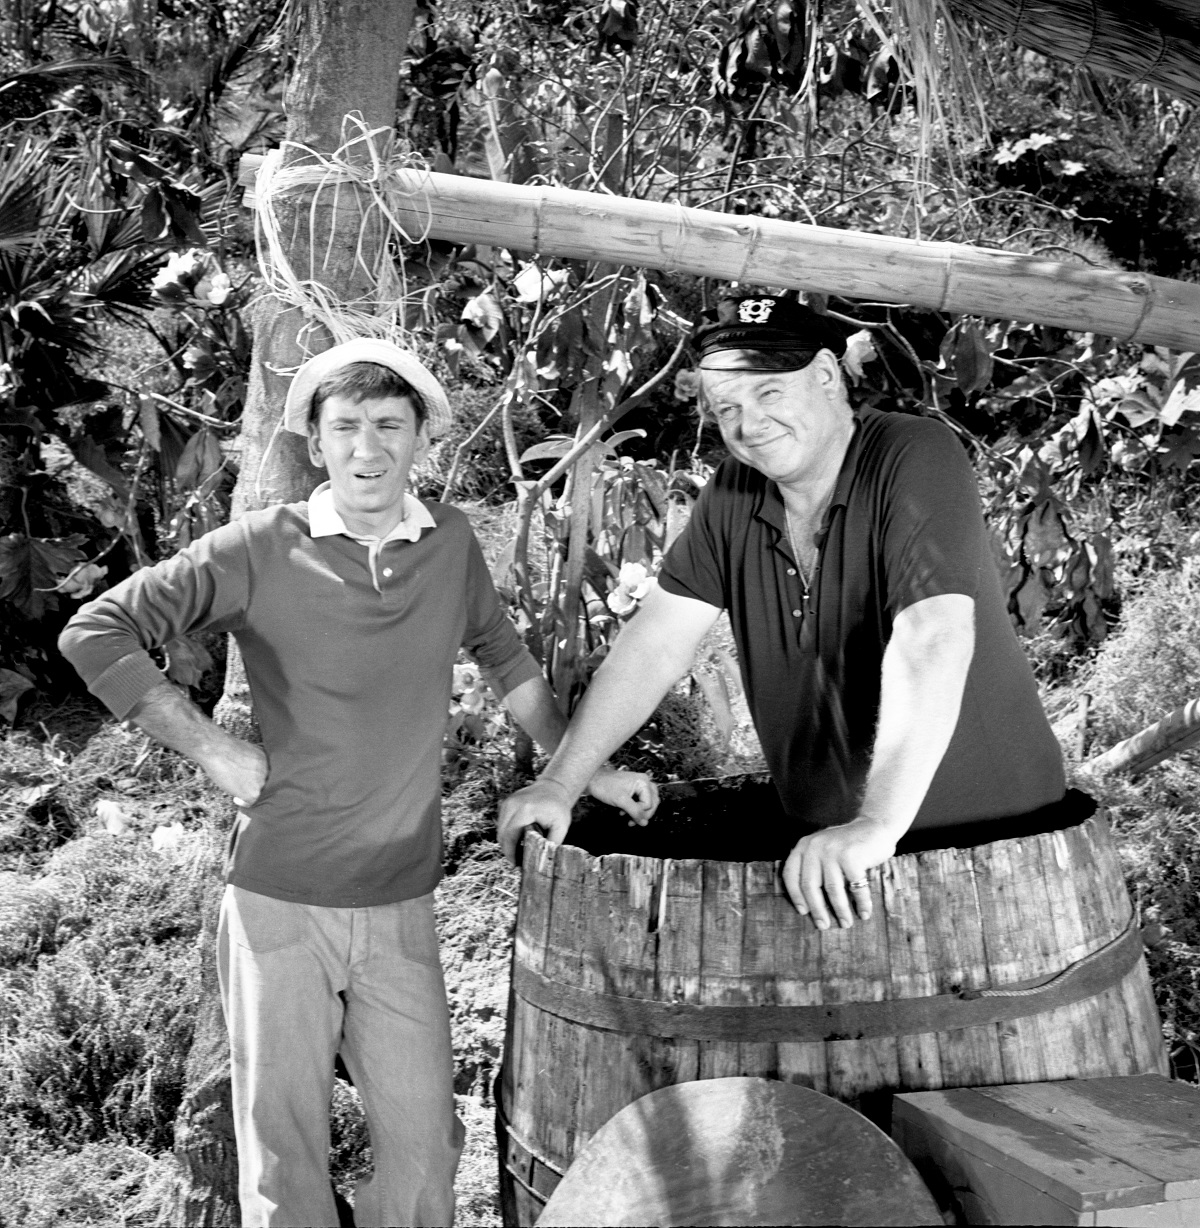 'Gilligan's Island' star Bob Denver poses next to Alan Hale Jr, who's stuck in a barrel.